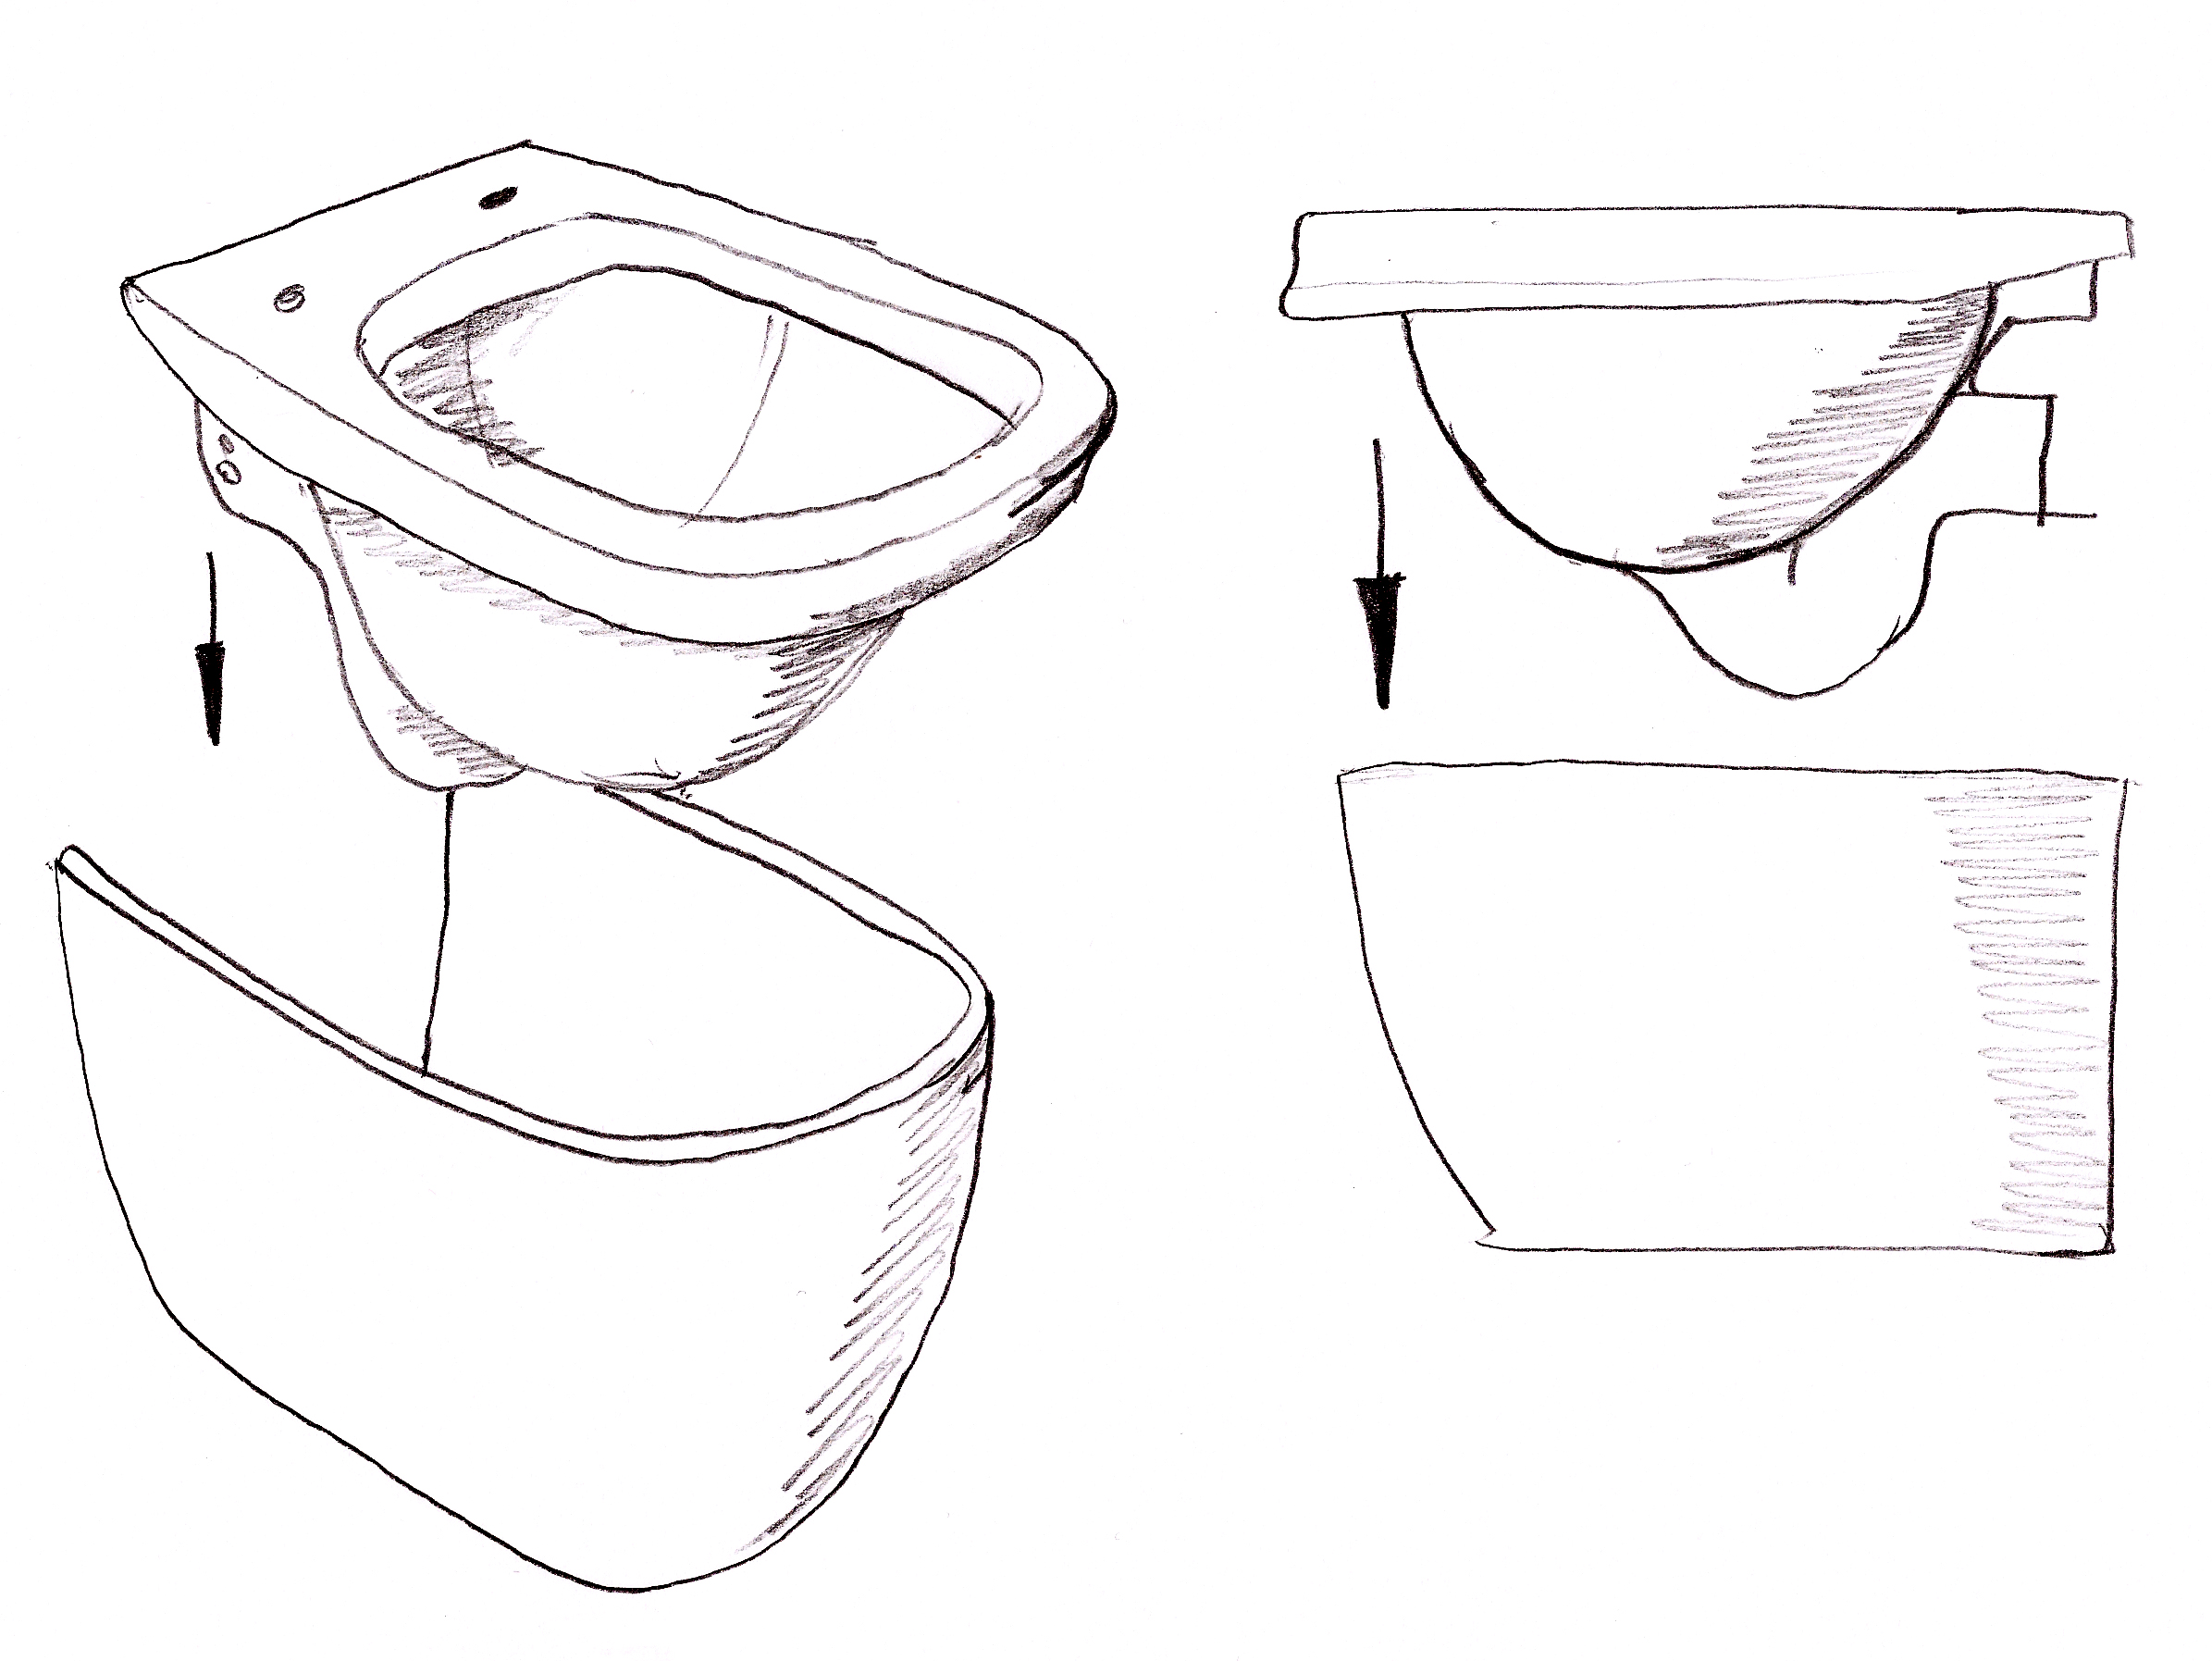 Sketch of Abito sanitaryware 